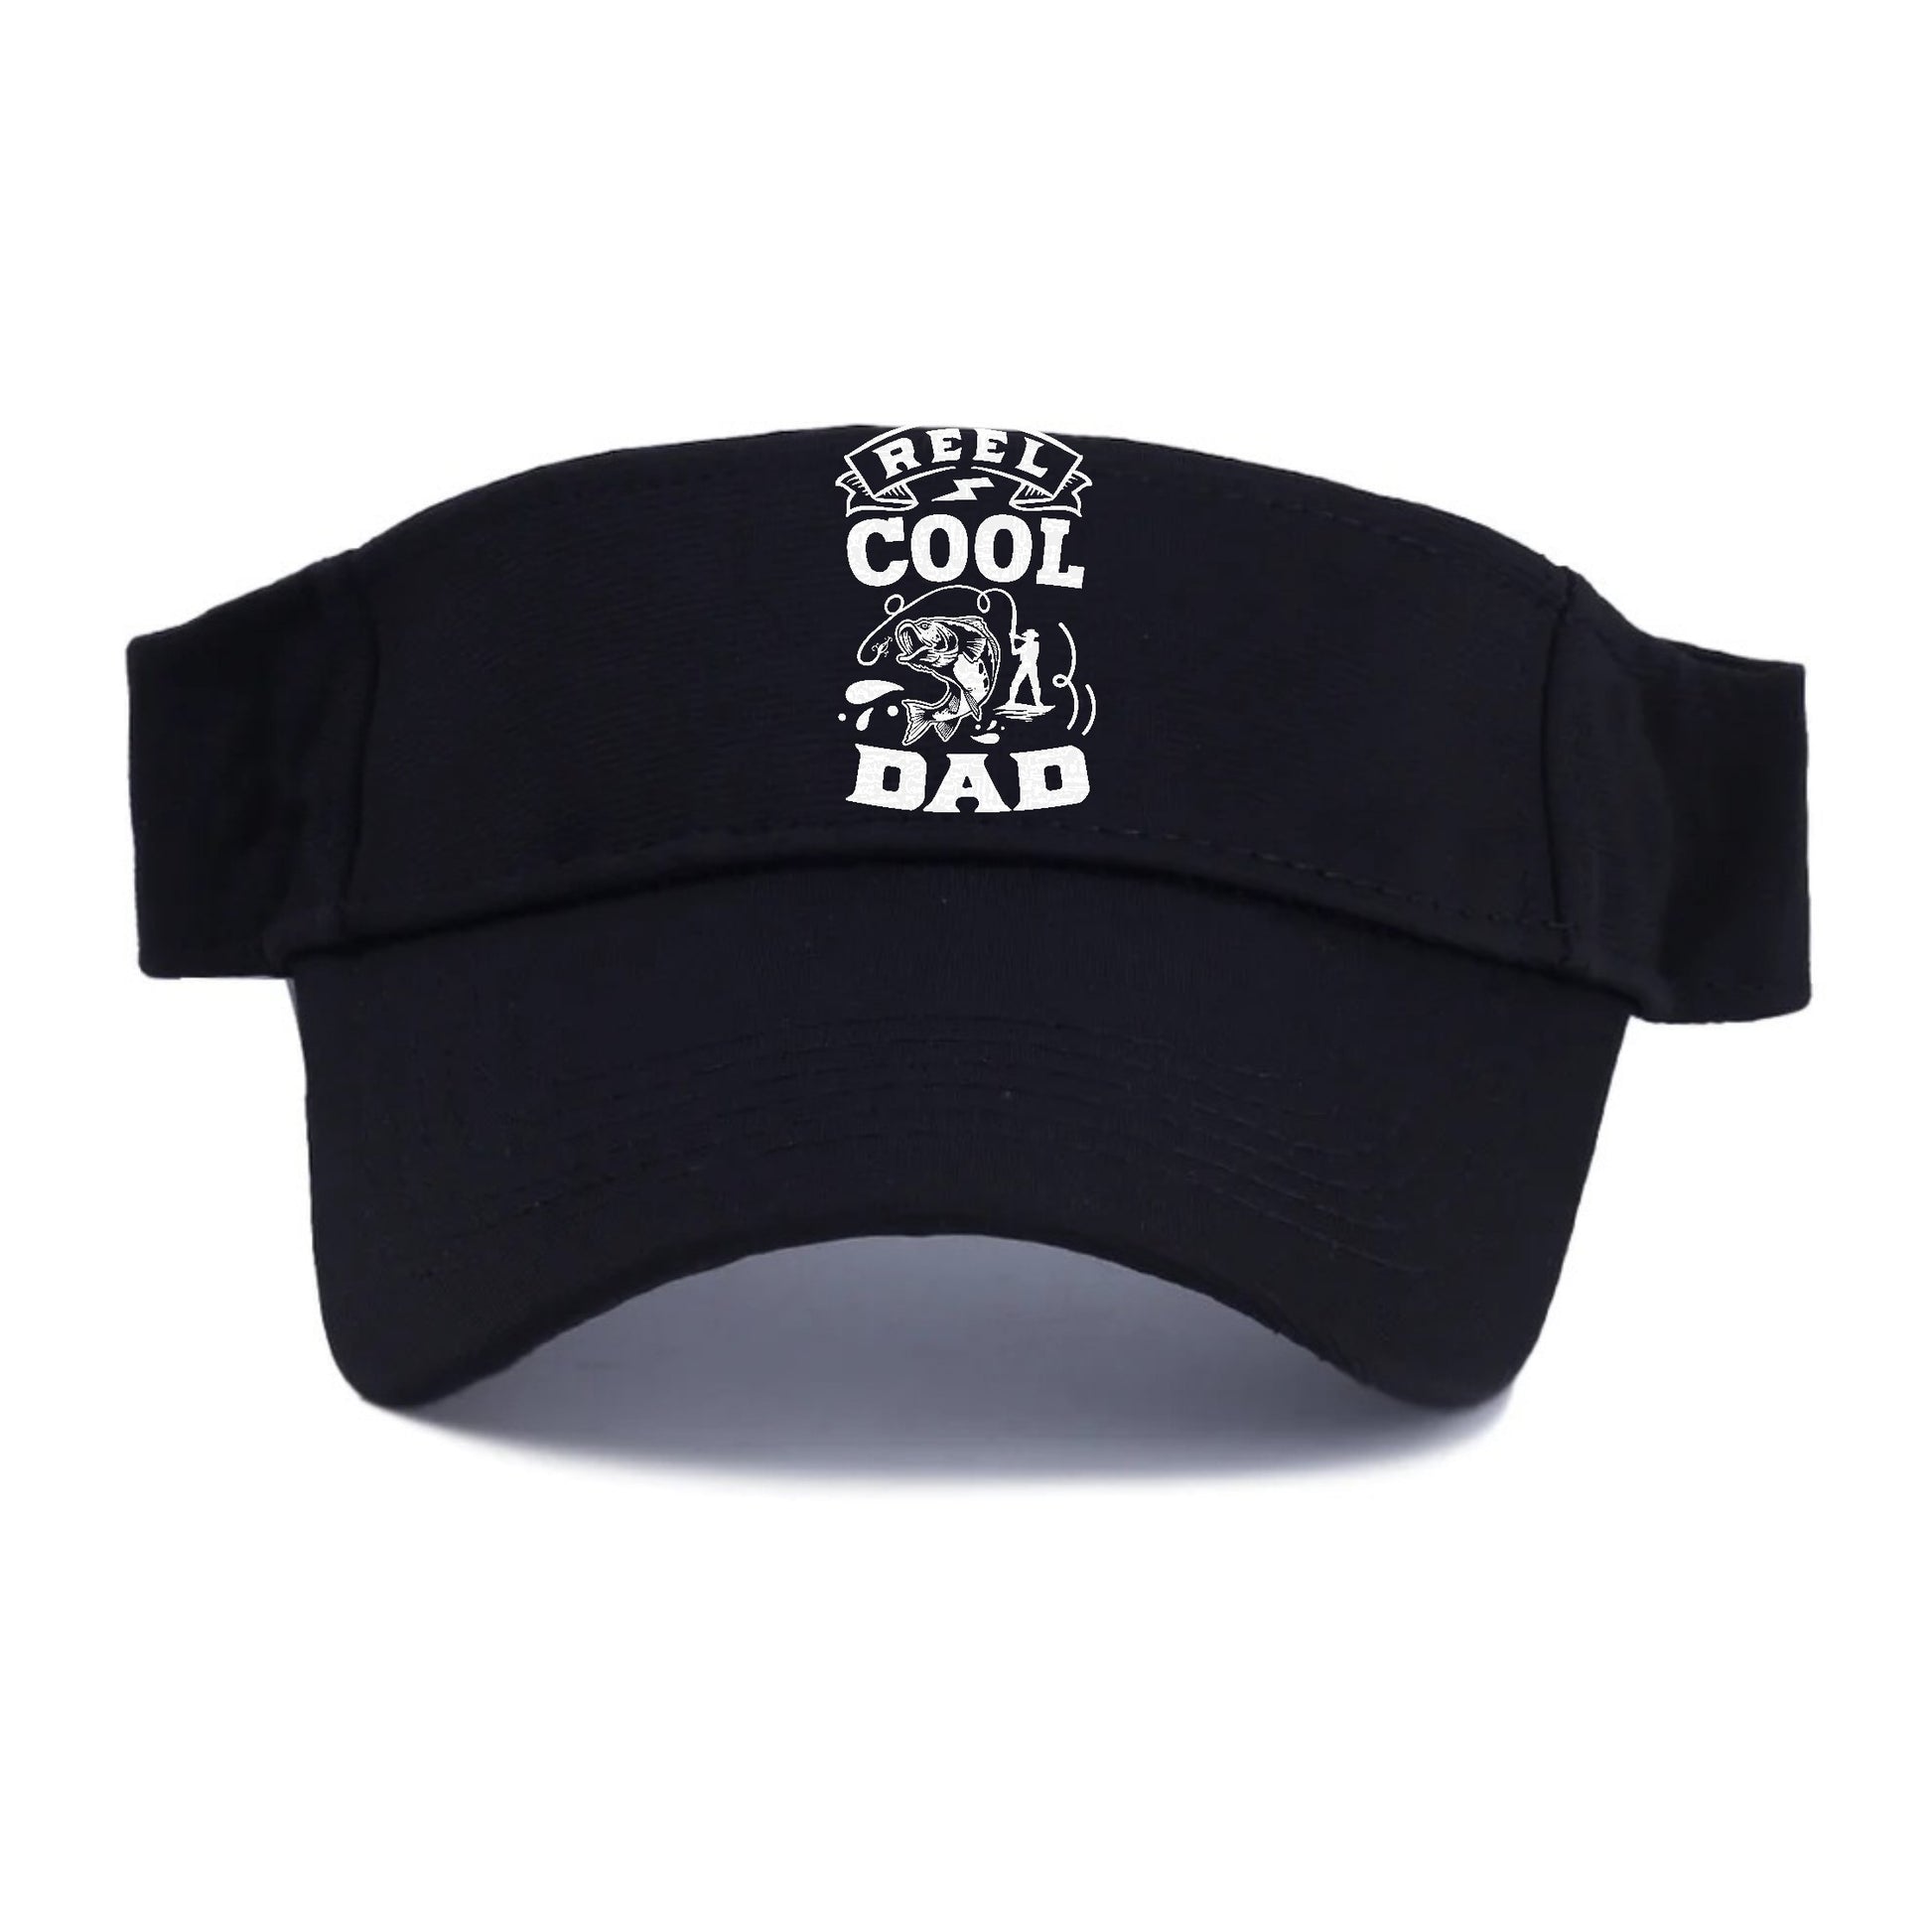 Reel cool dad Hat